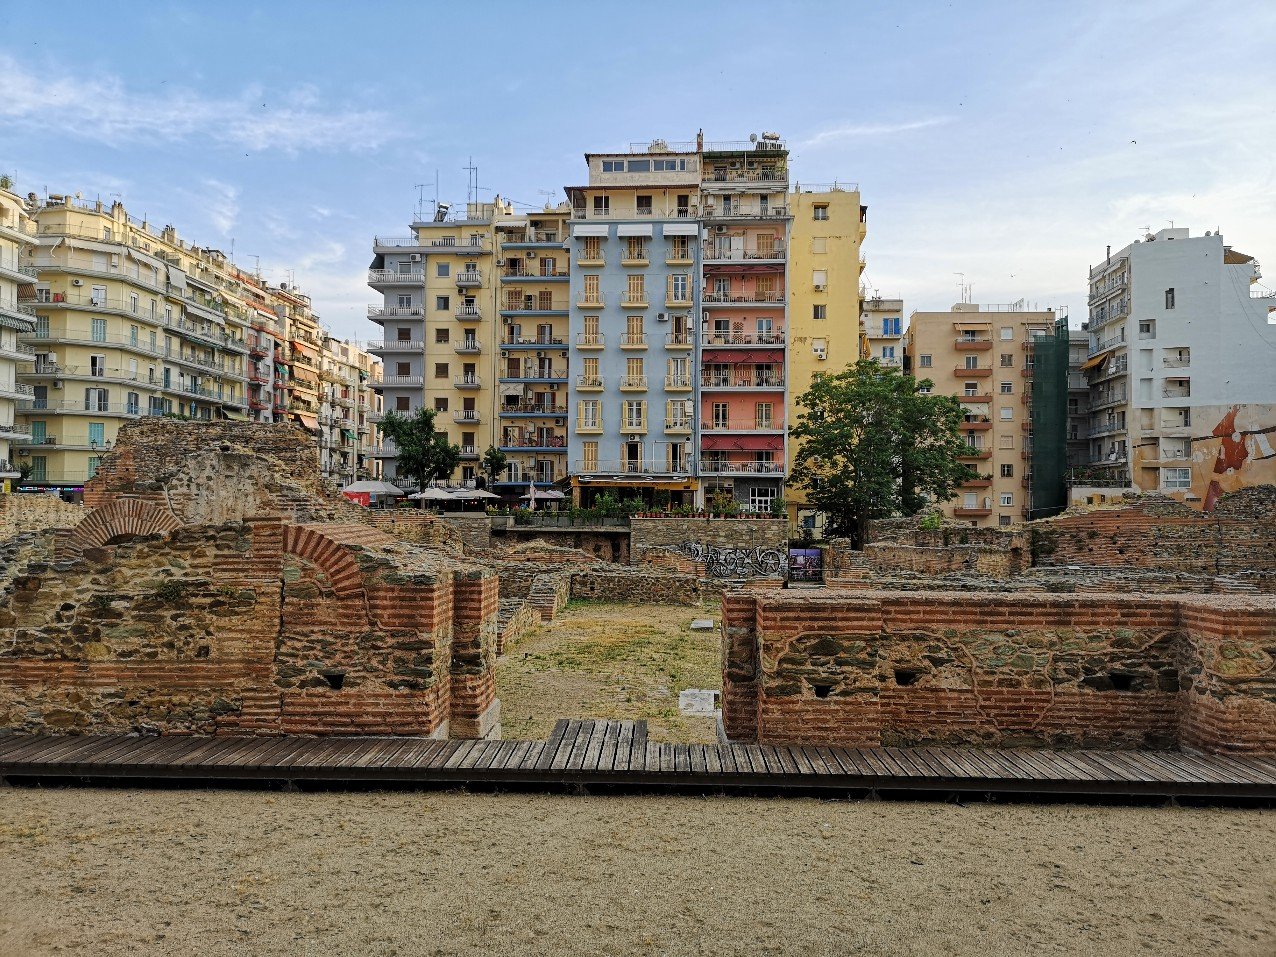 Apartment blocks and ancient walls 